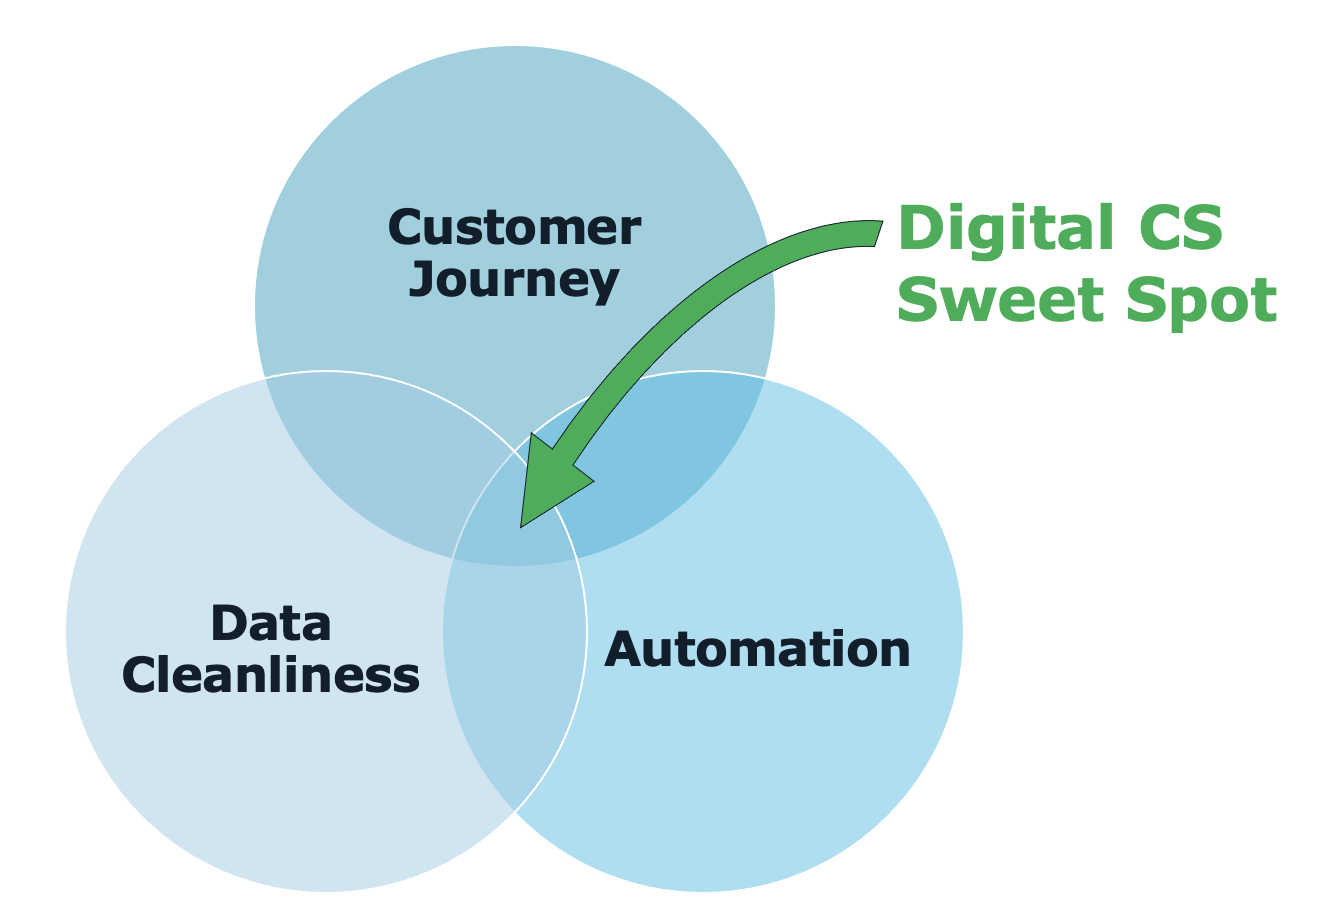 The Digital Customer Success Sweet Spot